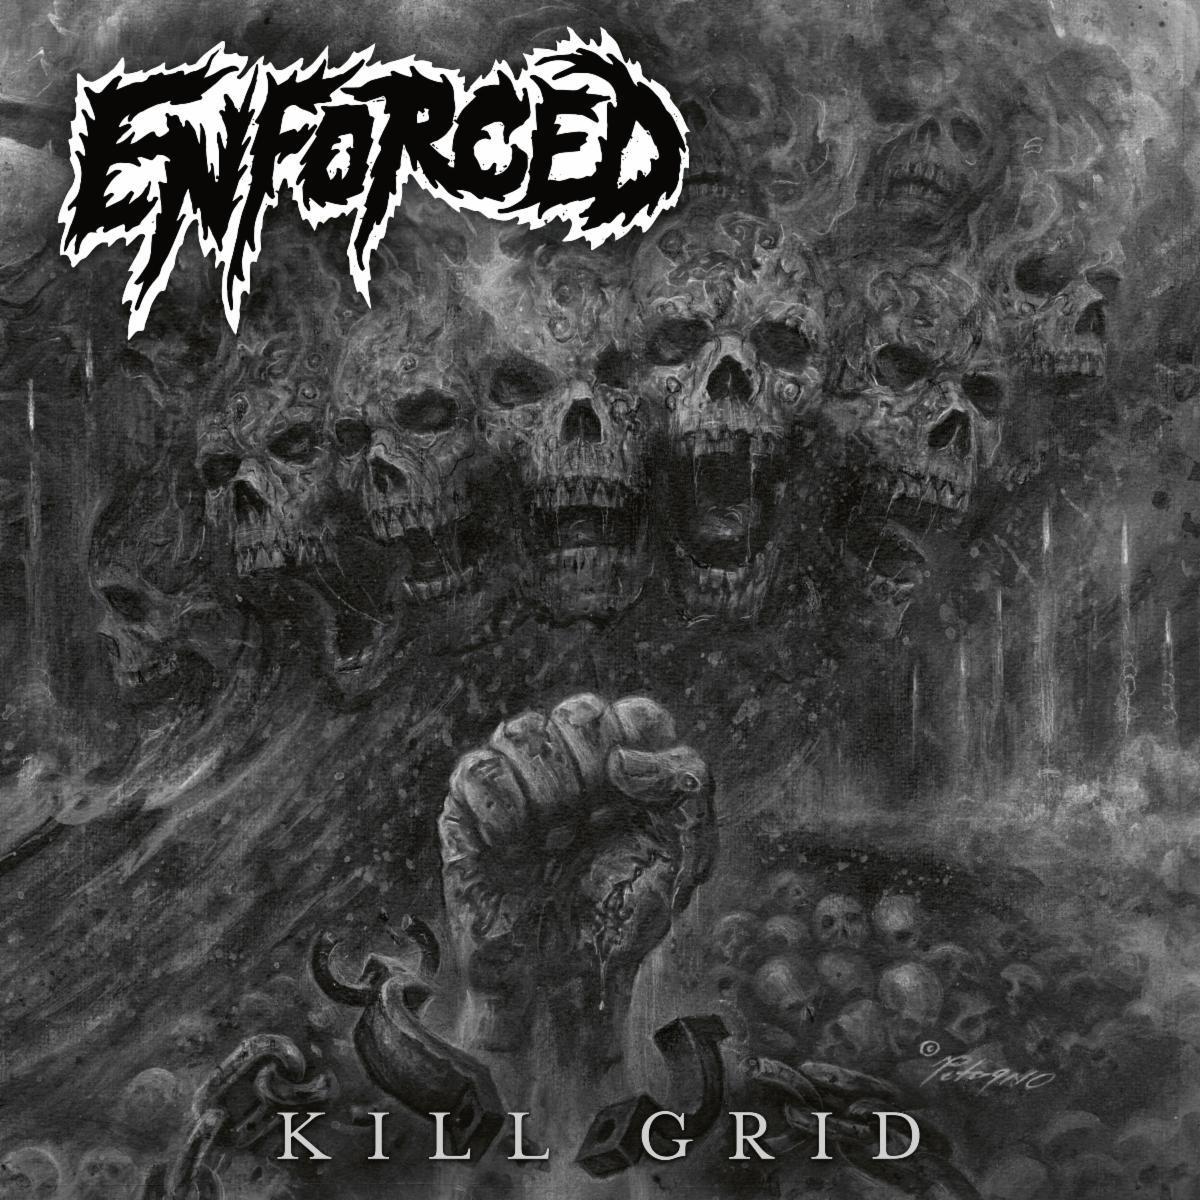 Enforced-Kill-Grid-01.jpg